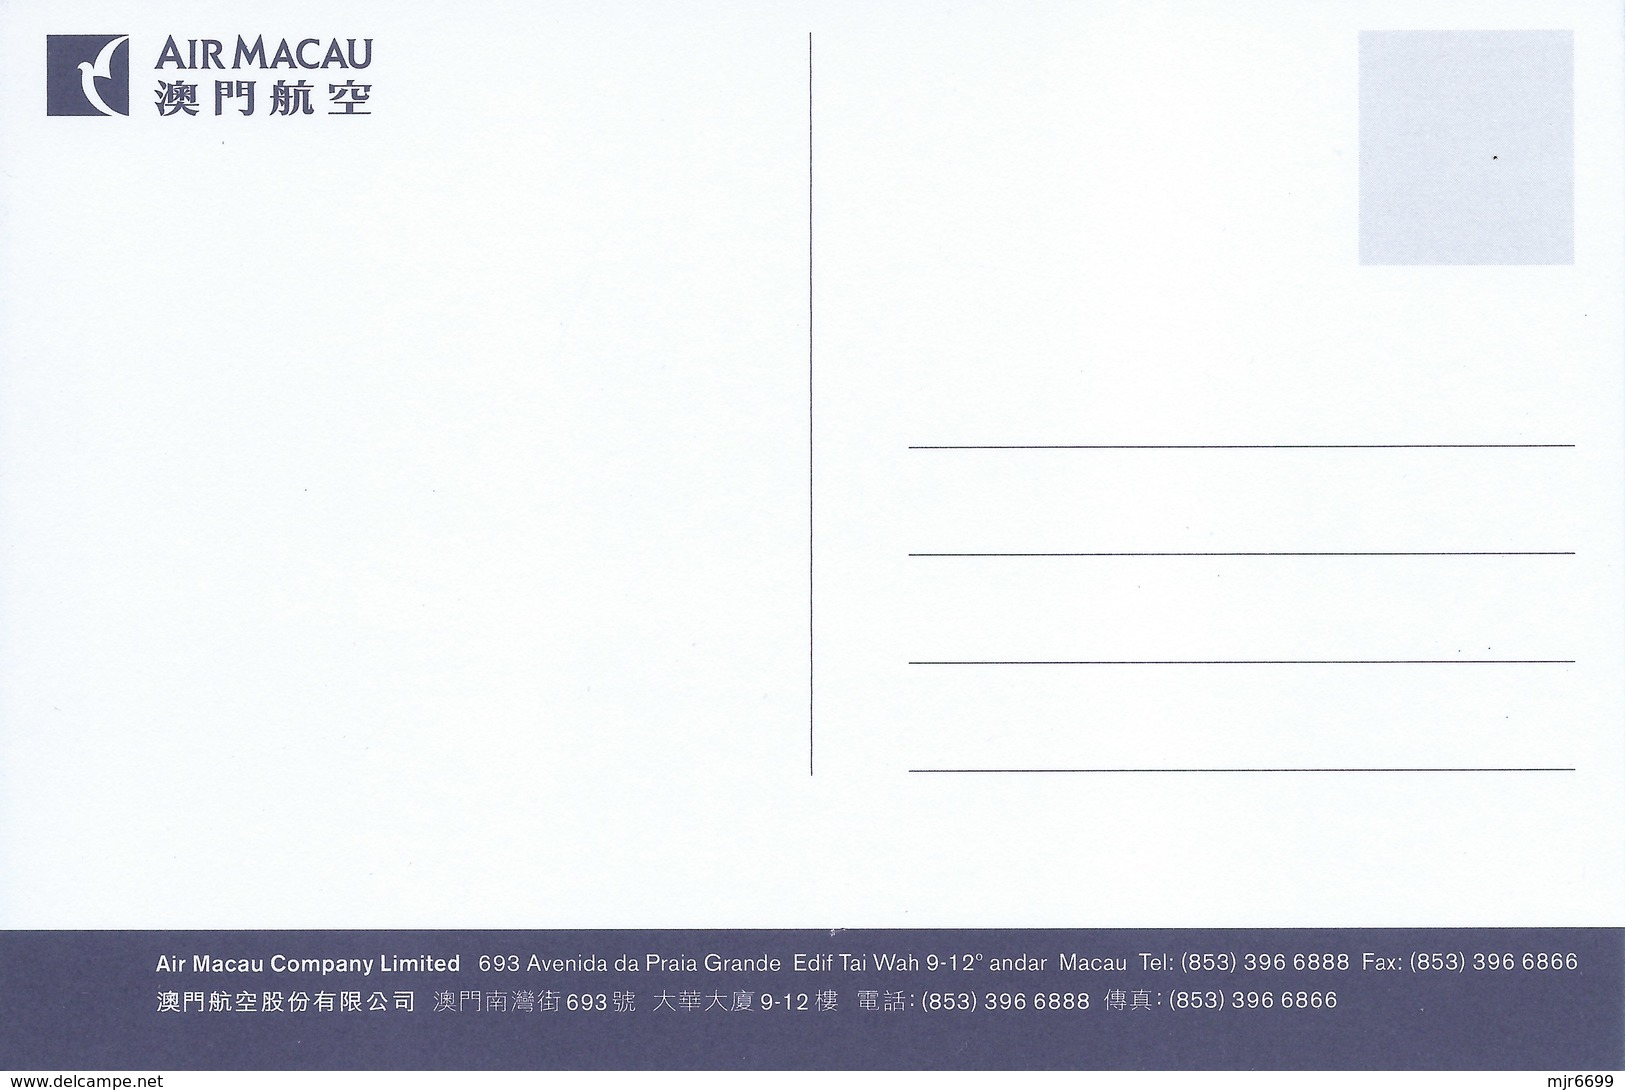 MACAU AIR MACAU COMPANY LIMITED AIRLINE POST CARD - Cina